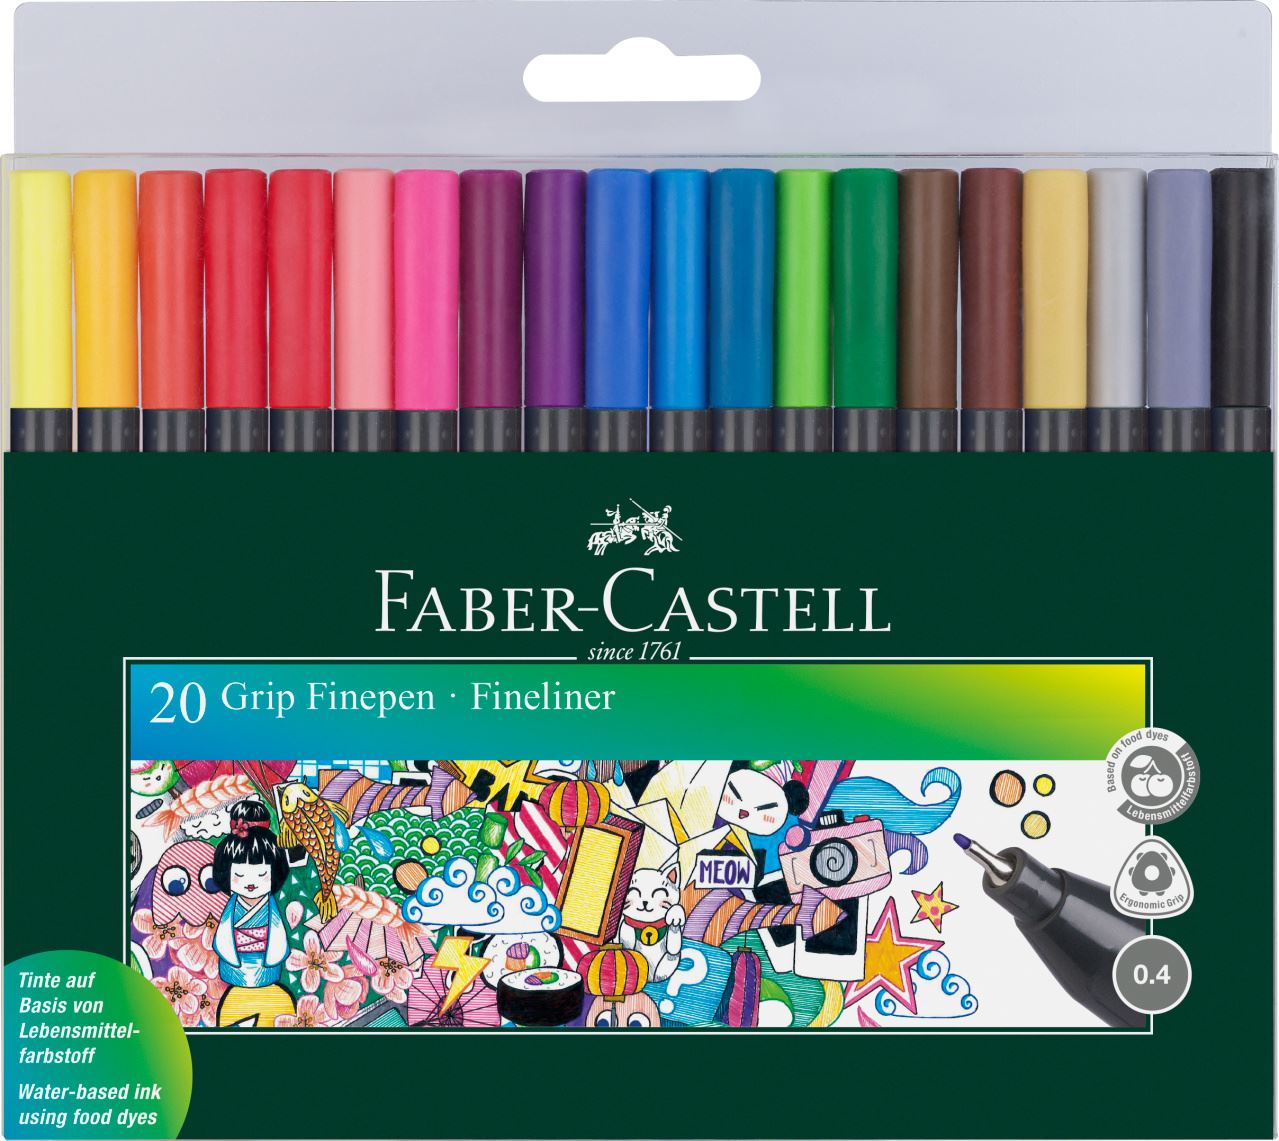 Faber-Castell Finepen Sets - Wyndham Art Supplies